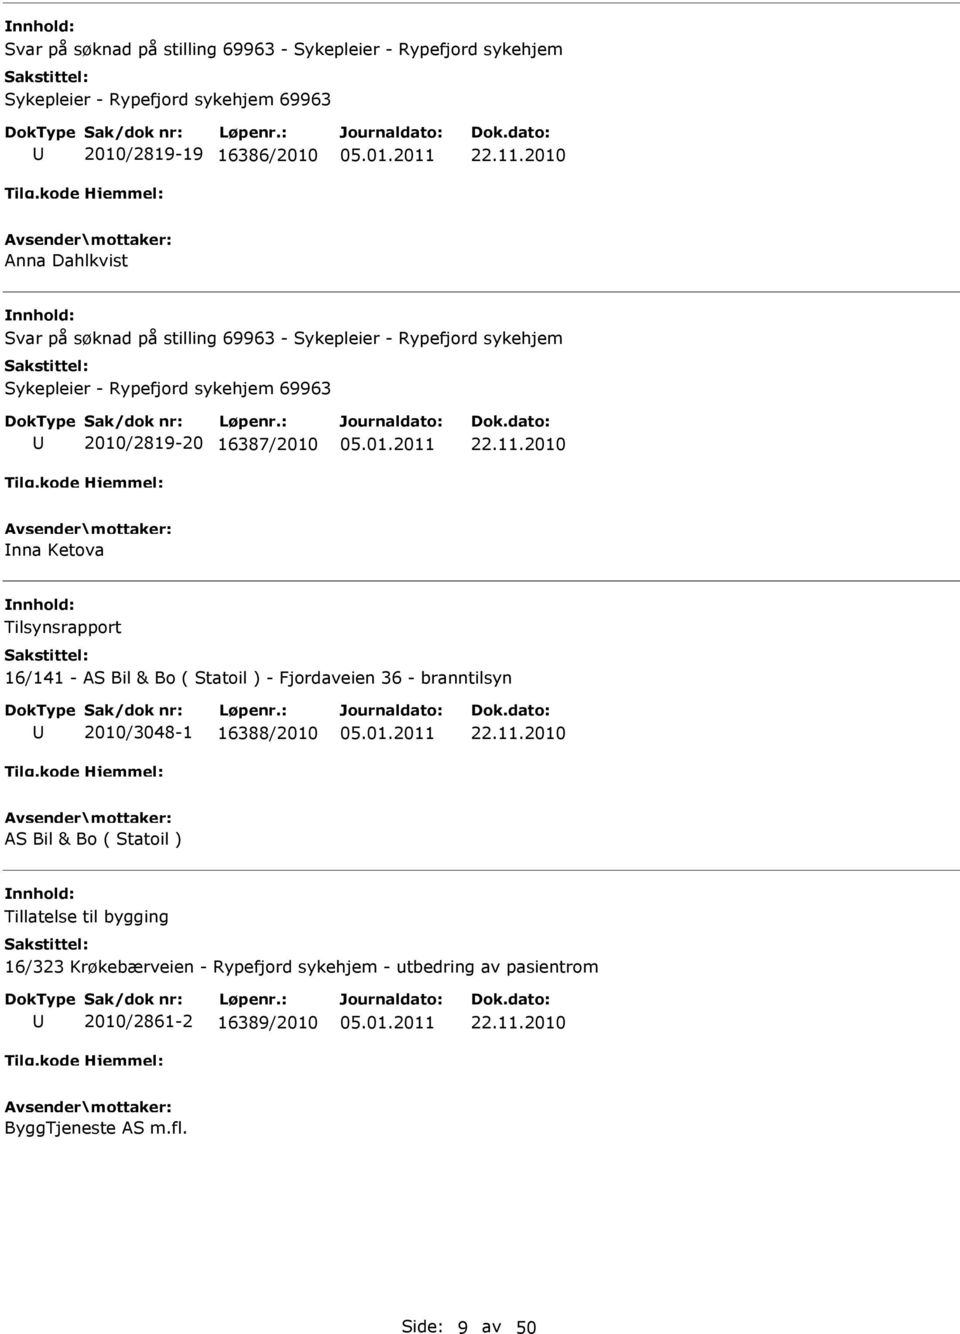 Inna Ketova Tilsynsrapport 16/141 - AS Bil & Bo ( Statoil ) - Fjordaveien 36 - branntilsyn 2010/3048-1 16388/2010 AS Bil & Bo ( Statoil )